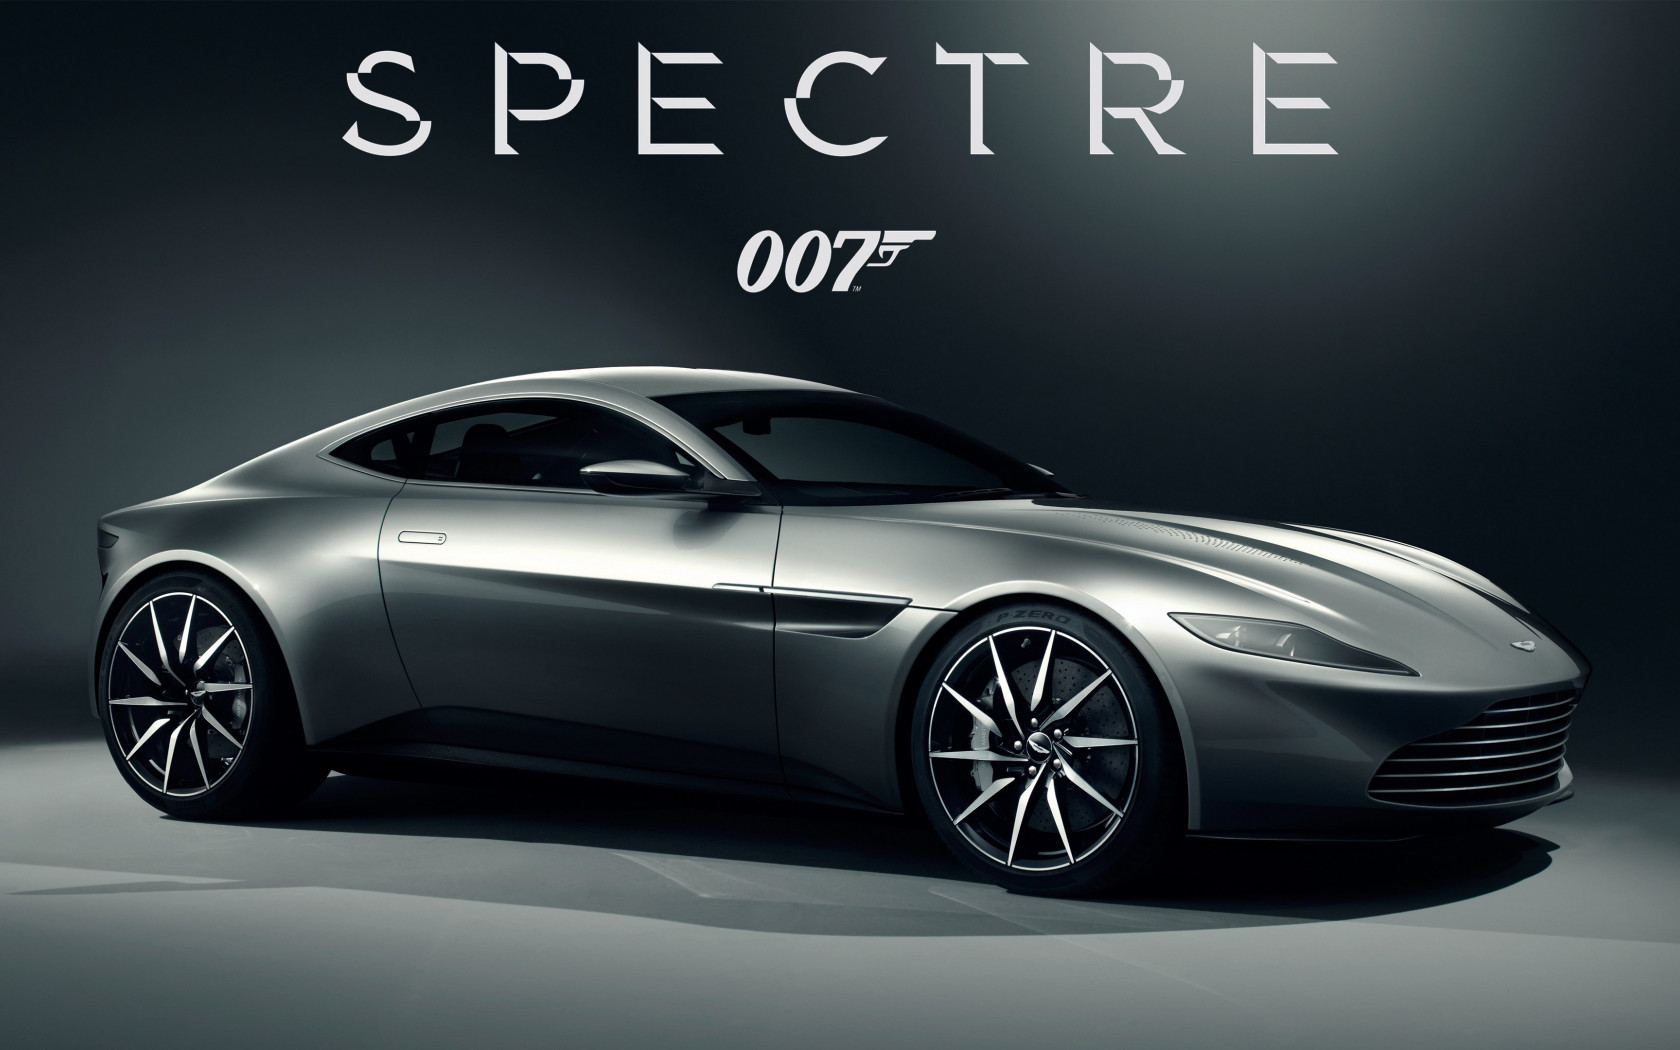 Aston Martin DB10 007 Spectre car wallpaper 1680x1050